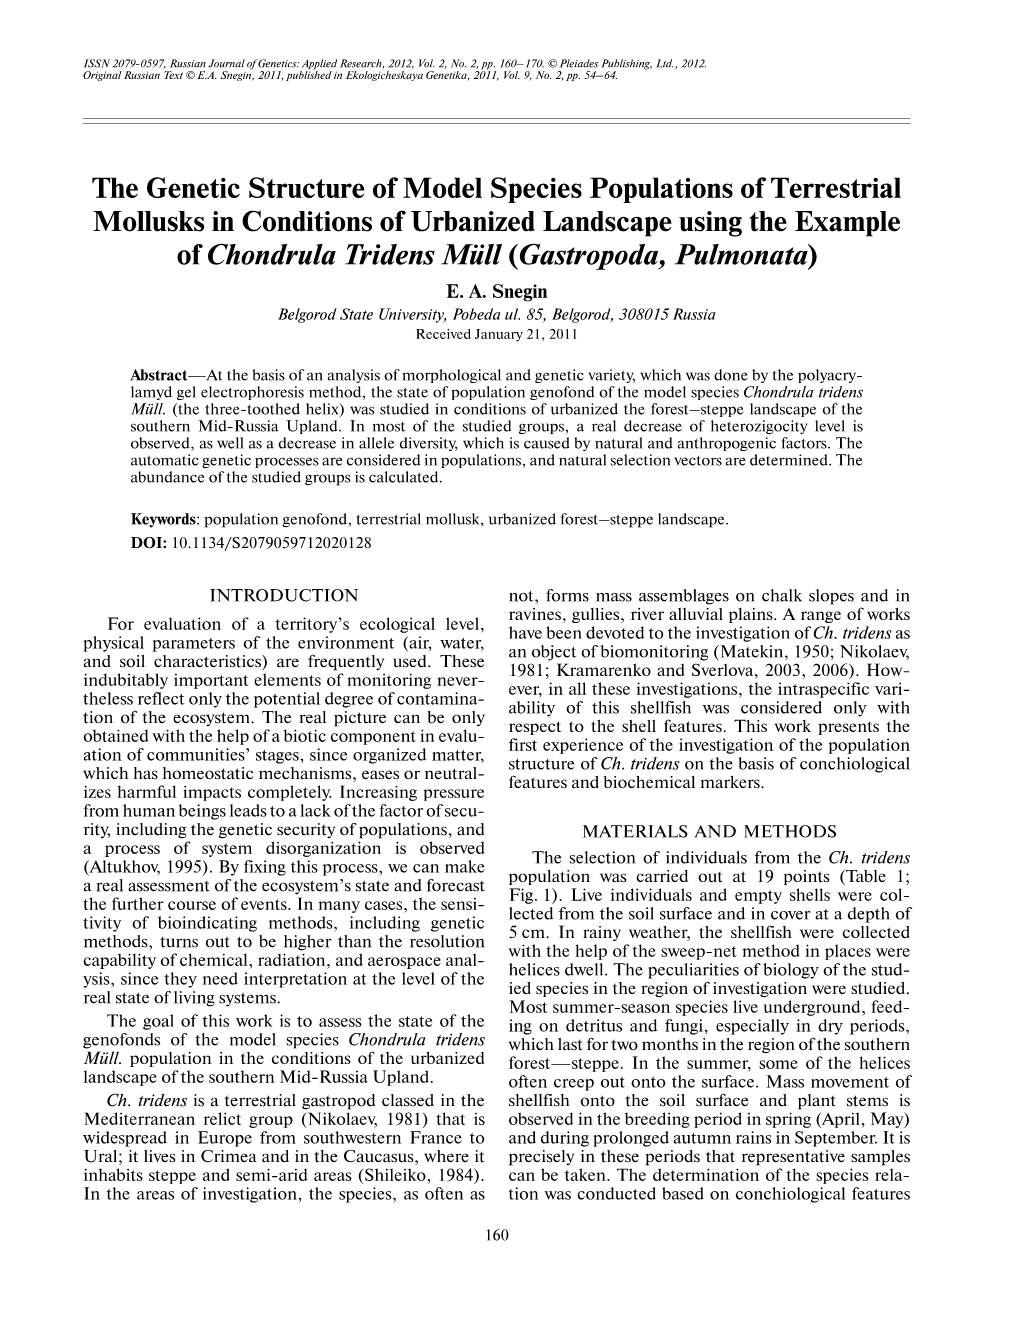 The Genetic Structure of Model Species Populations of Terrestrial